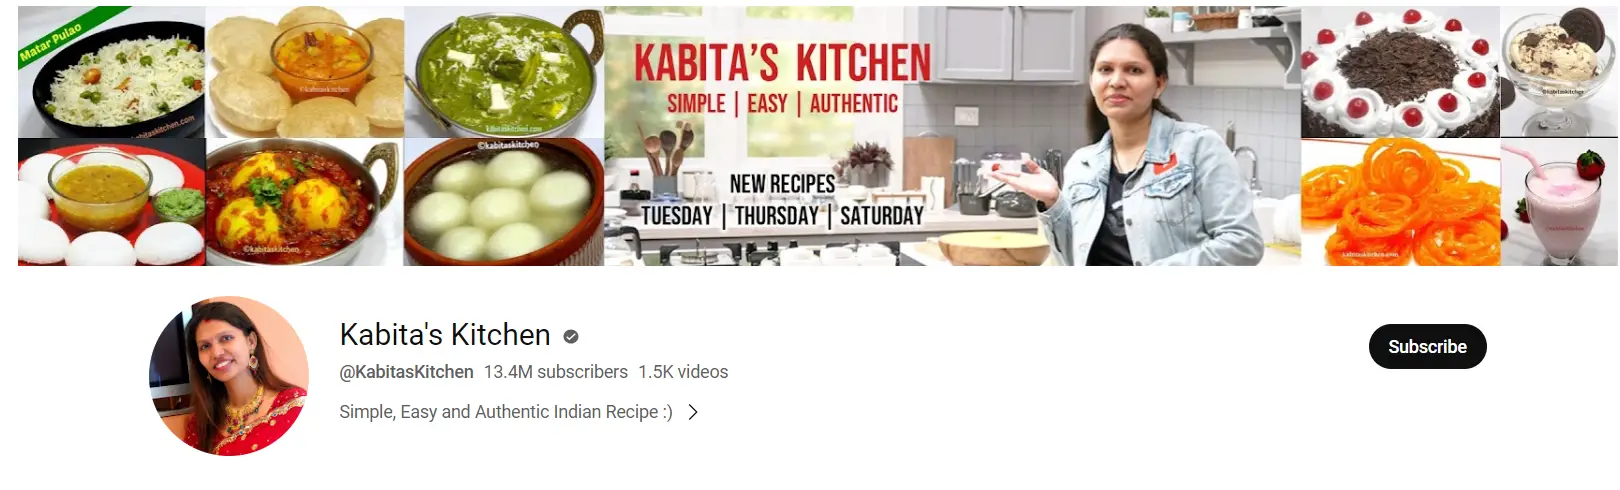 Kabita's kitchen